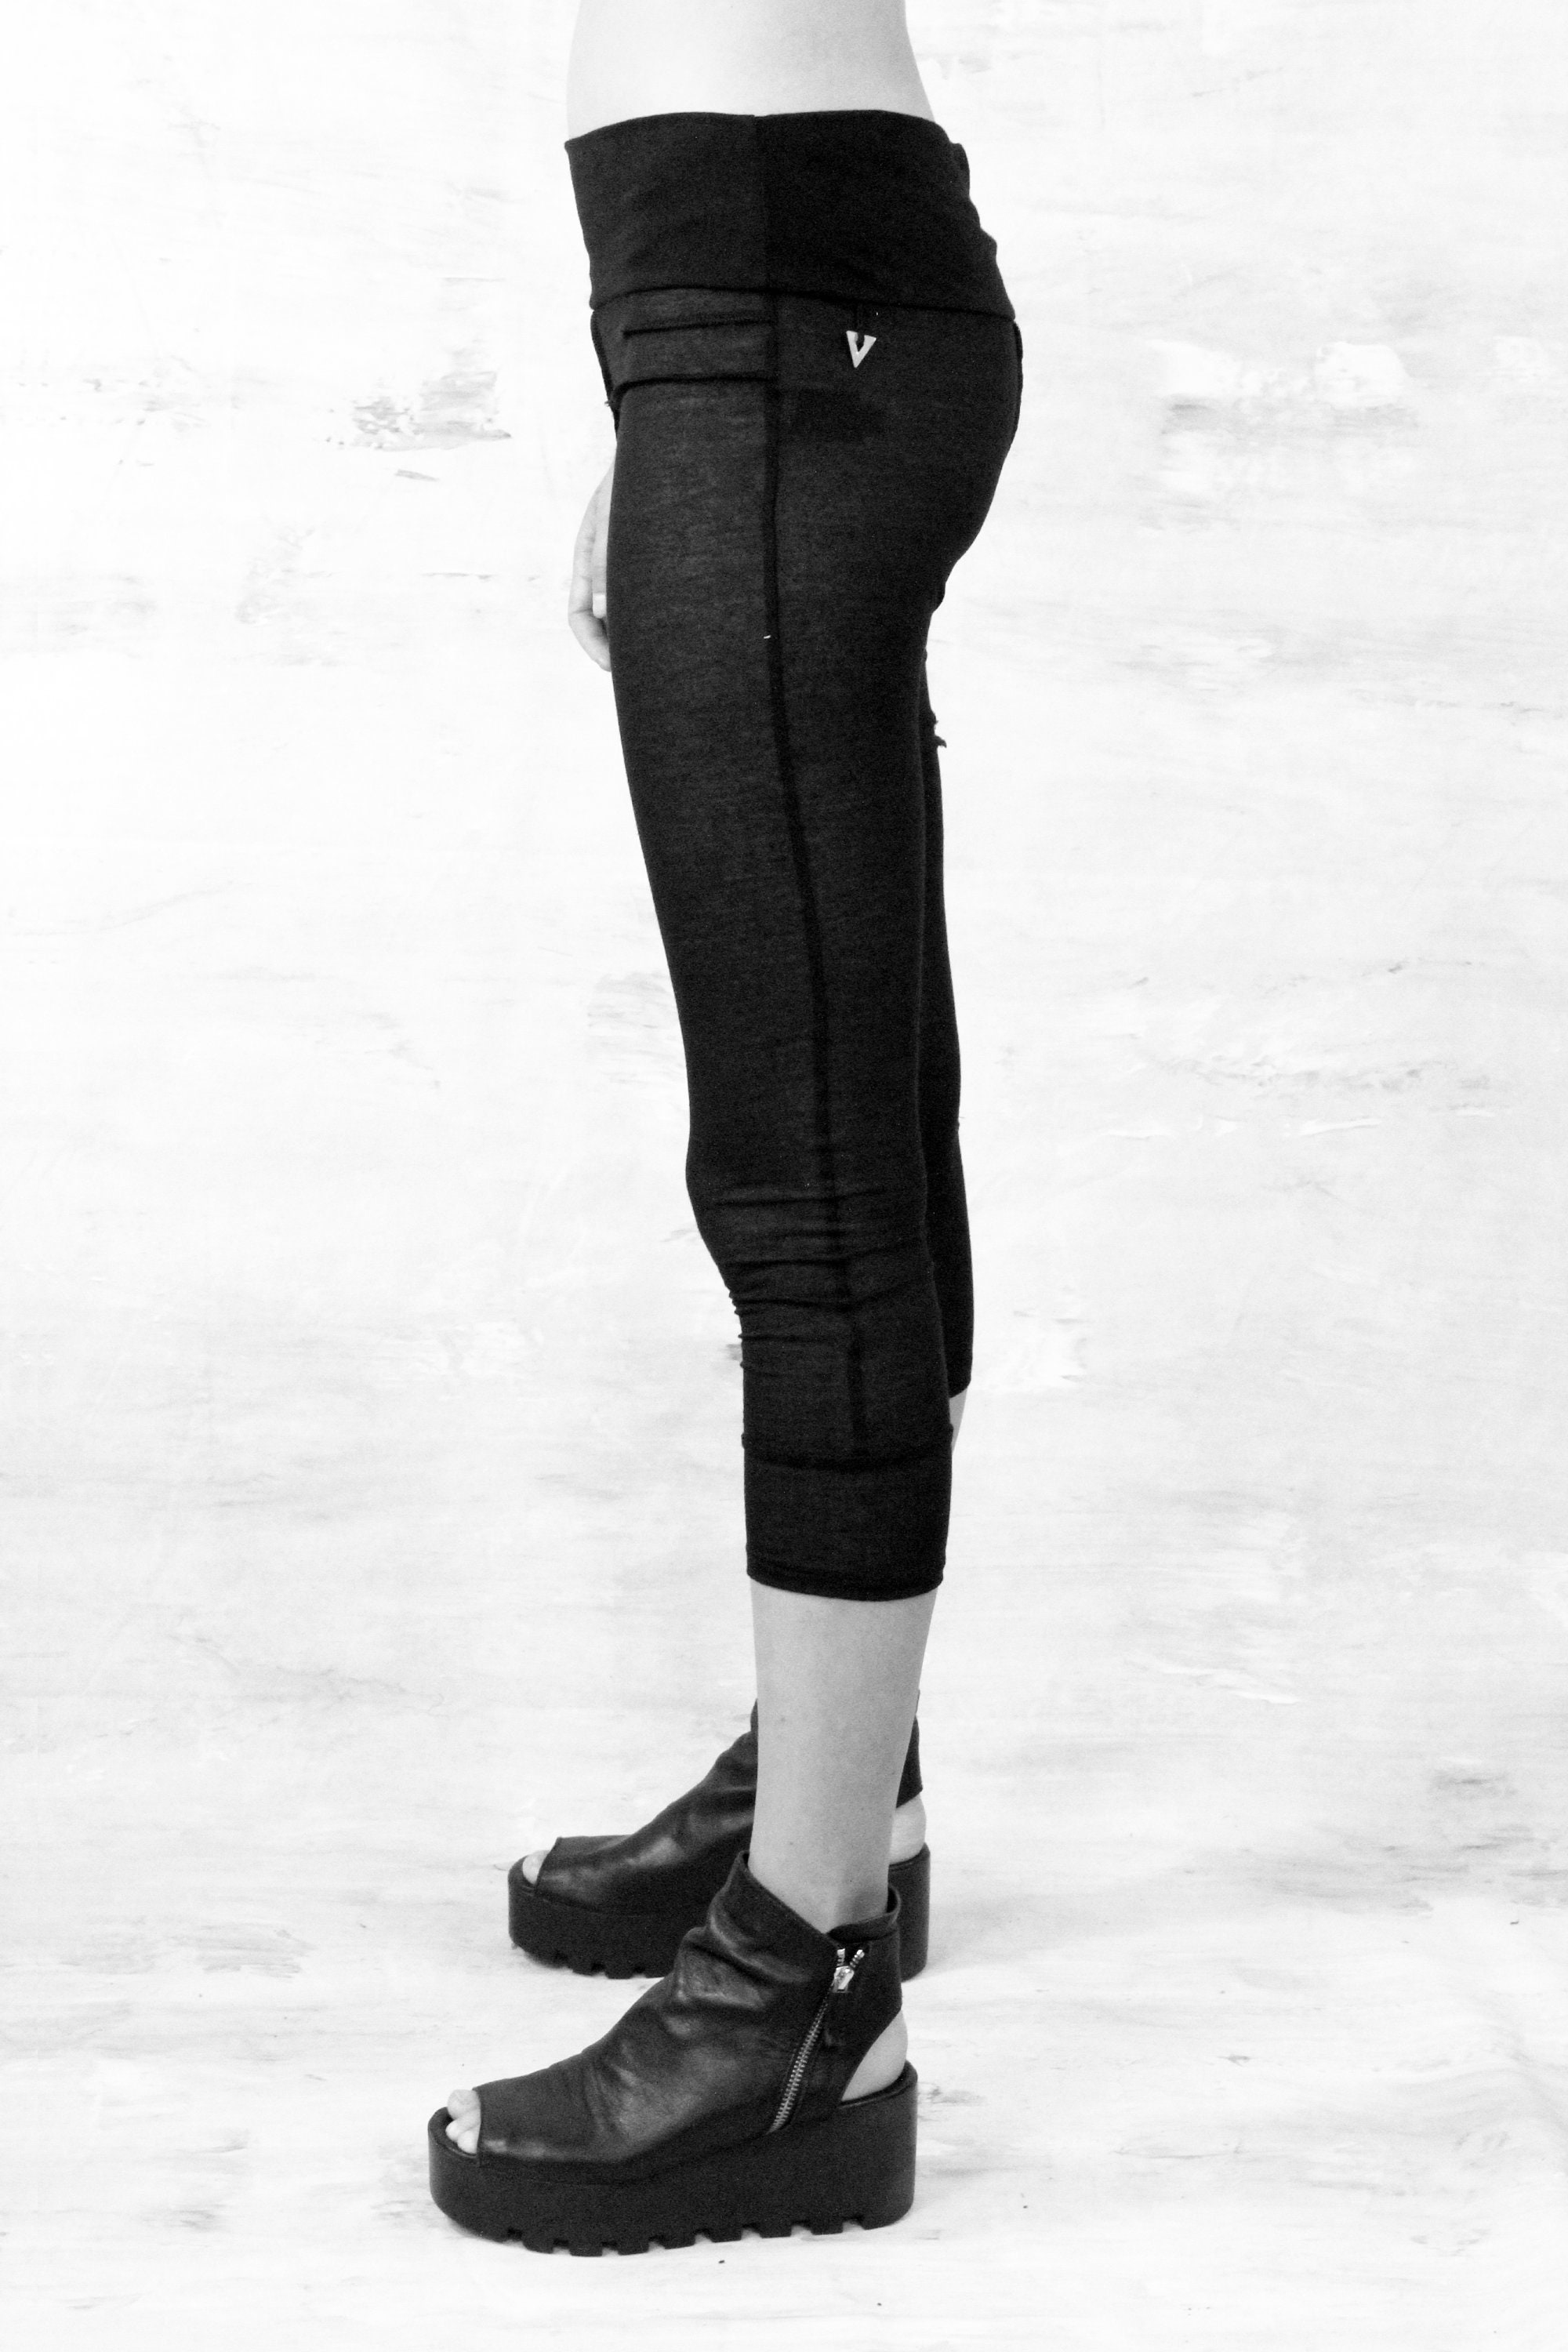 Transparent Black Leggings Black Knit Leggings Women's Urban Fashion  Futuristic Clothing See Through Leggings Goth Clubwear UMMOK -  Canada